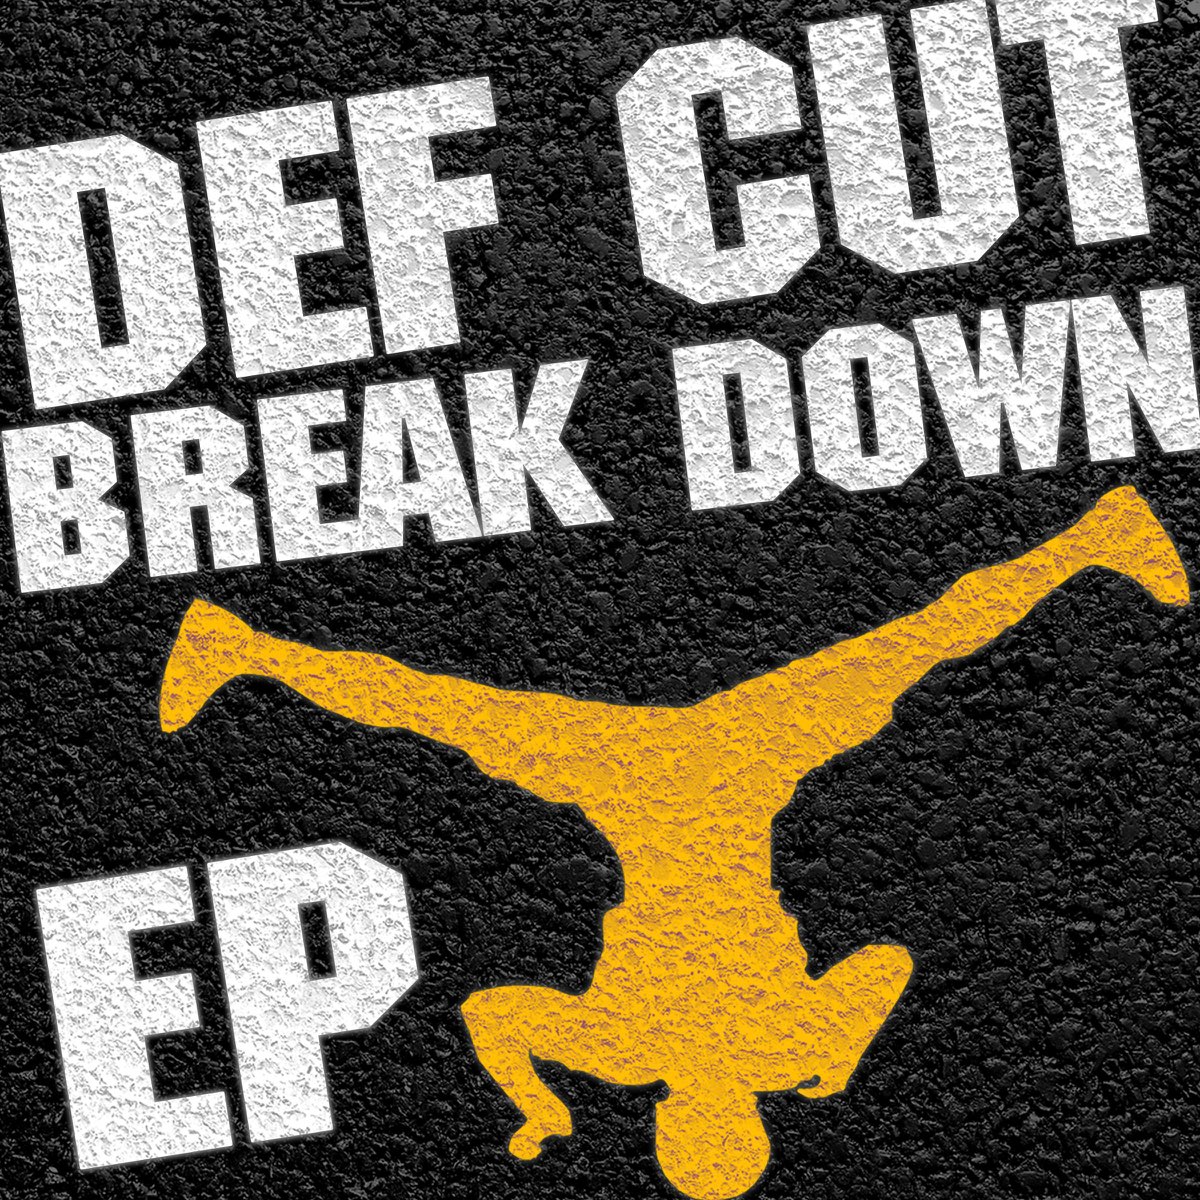 Break this down. DJ Def. Def Cut. Broke down. Надпись struggle.